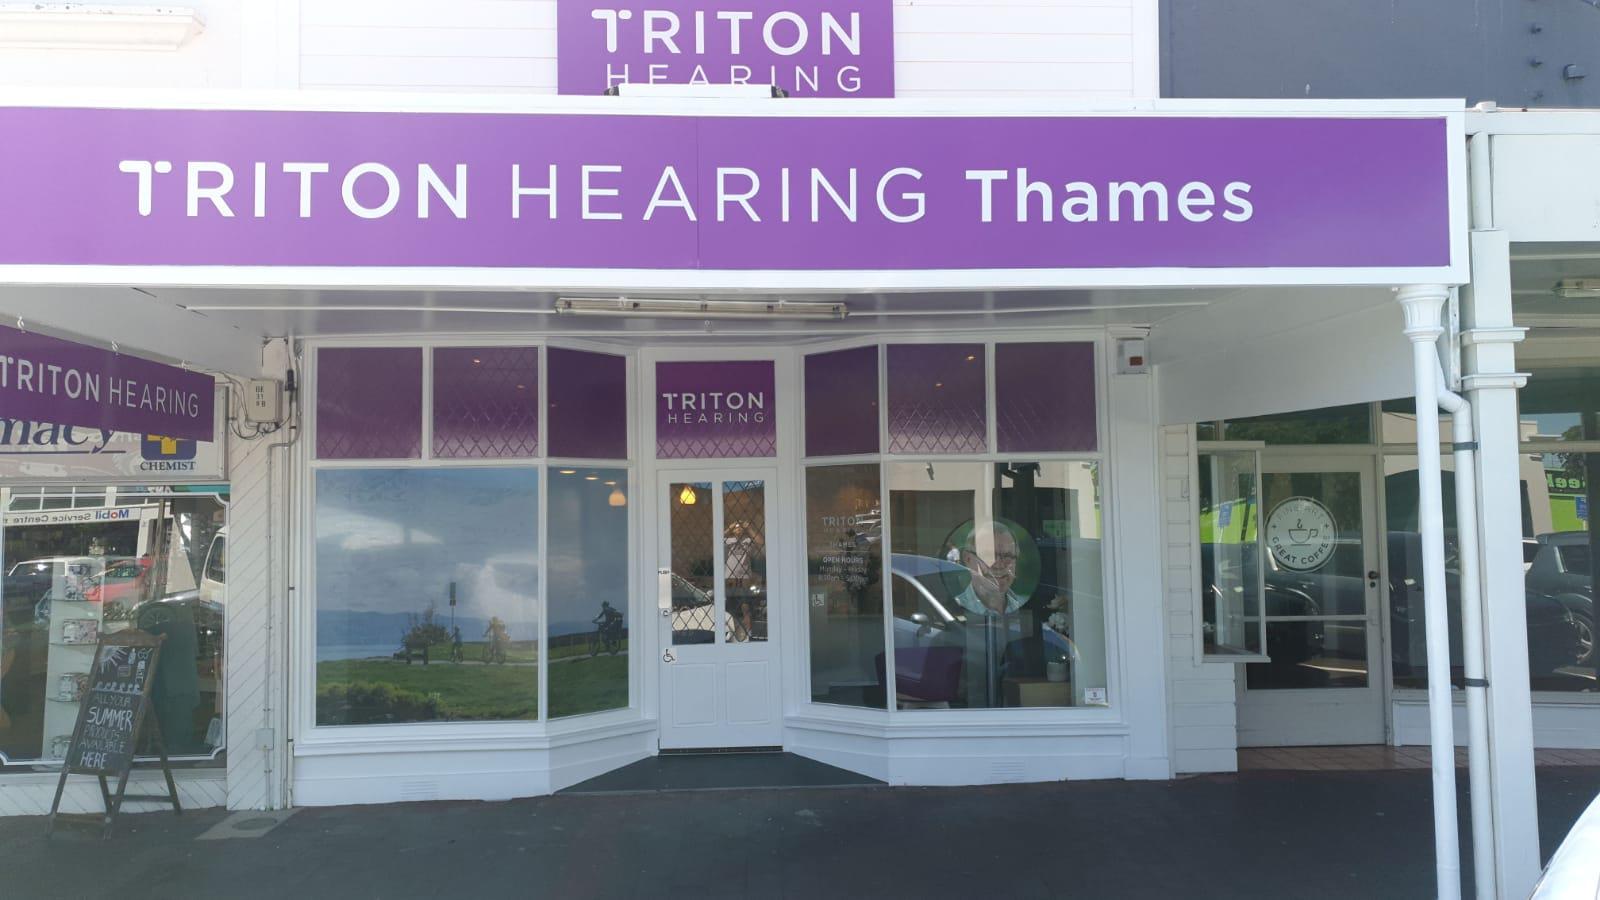 Images Triton Hearing, Thames